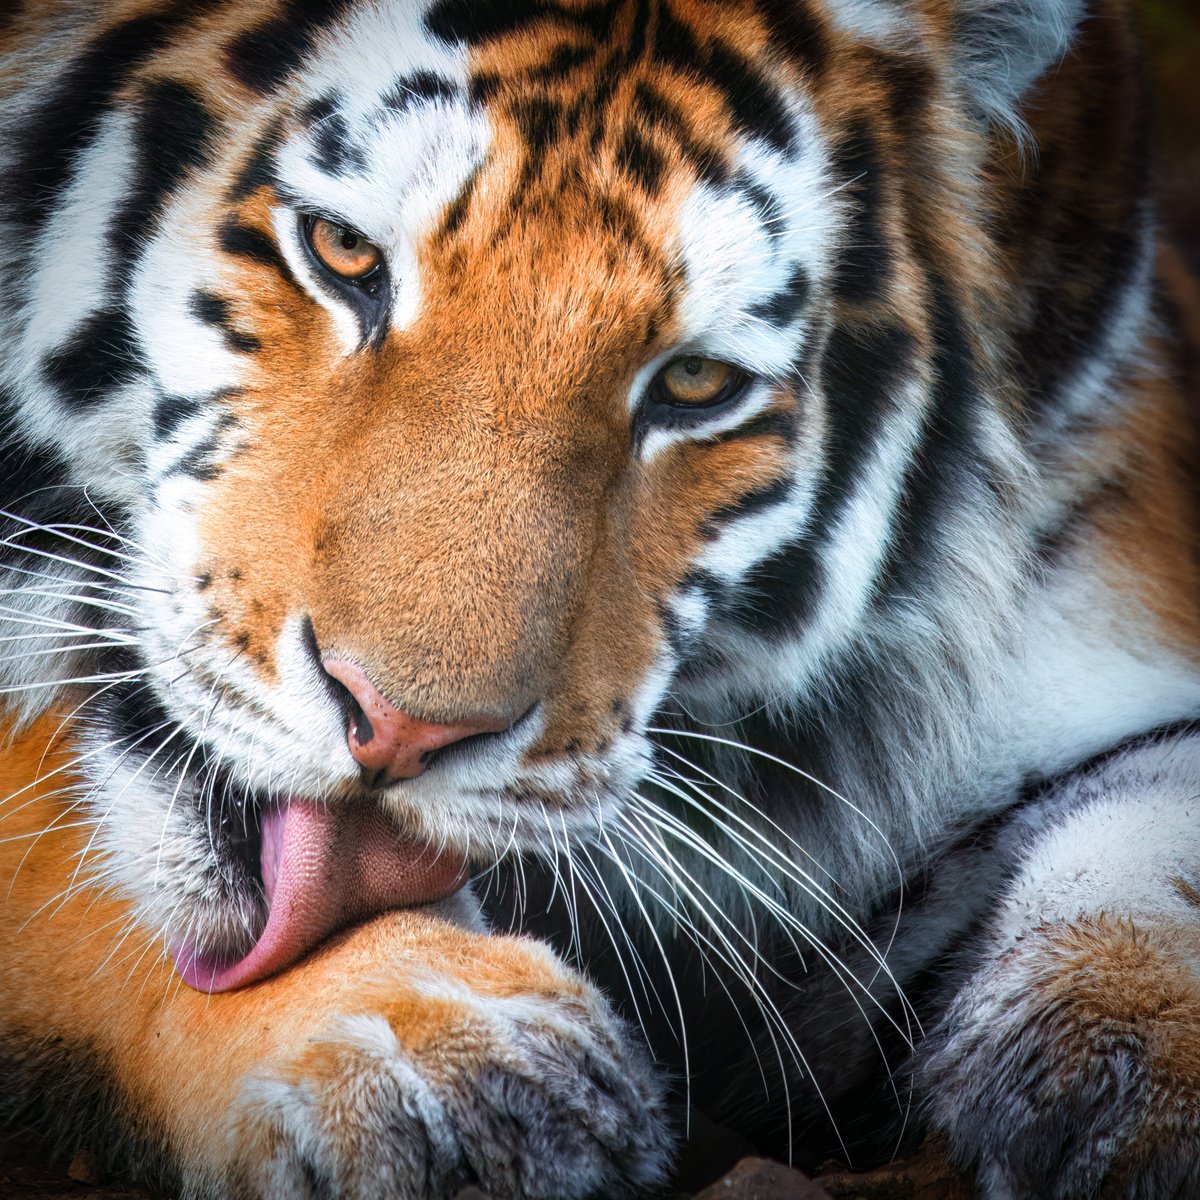 Grooming tiger by Paul Nash